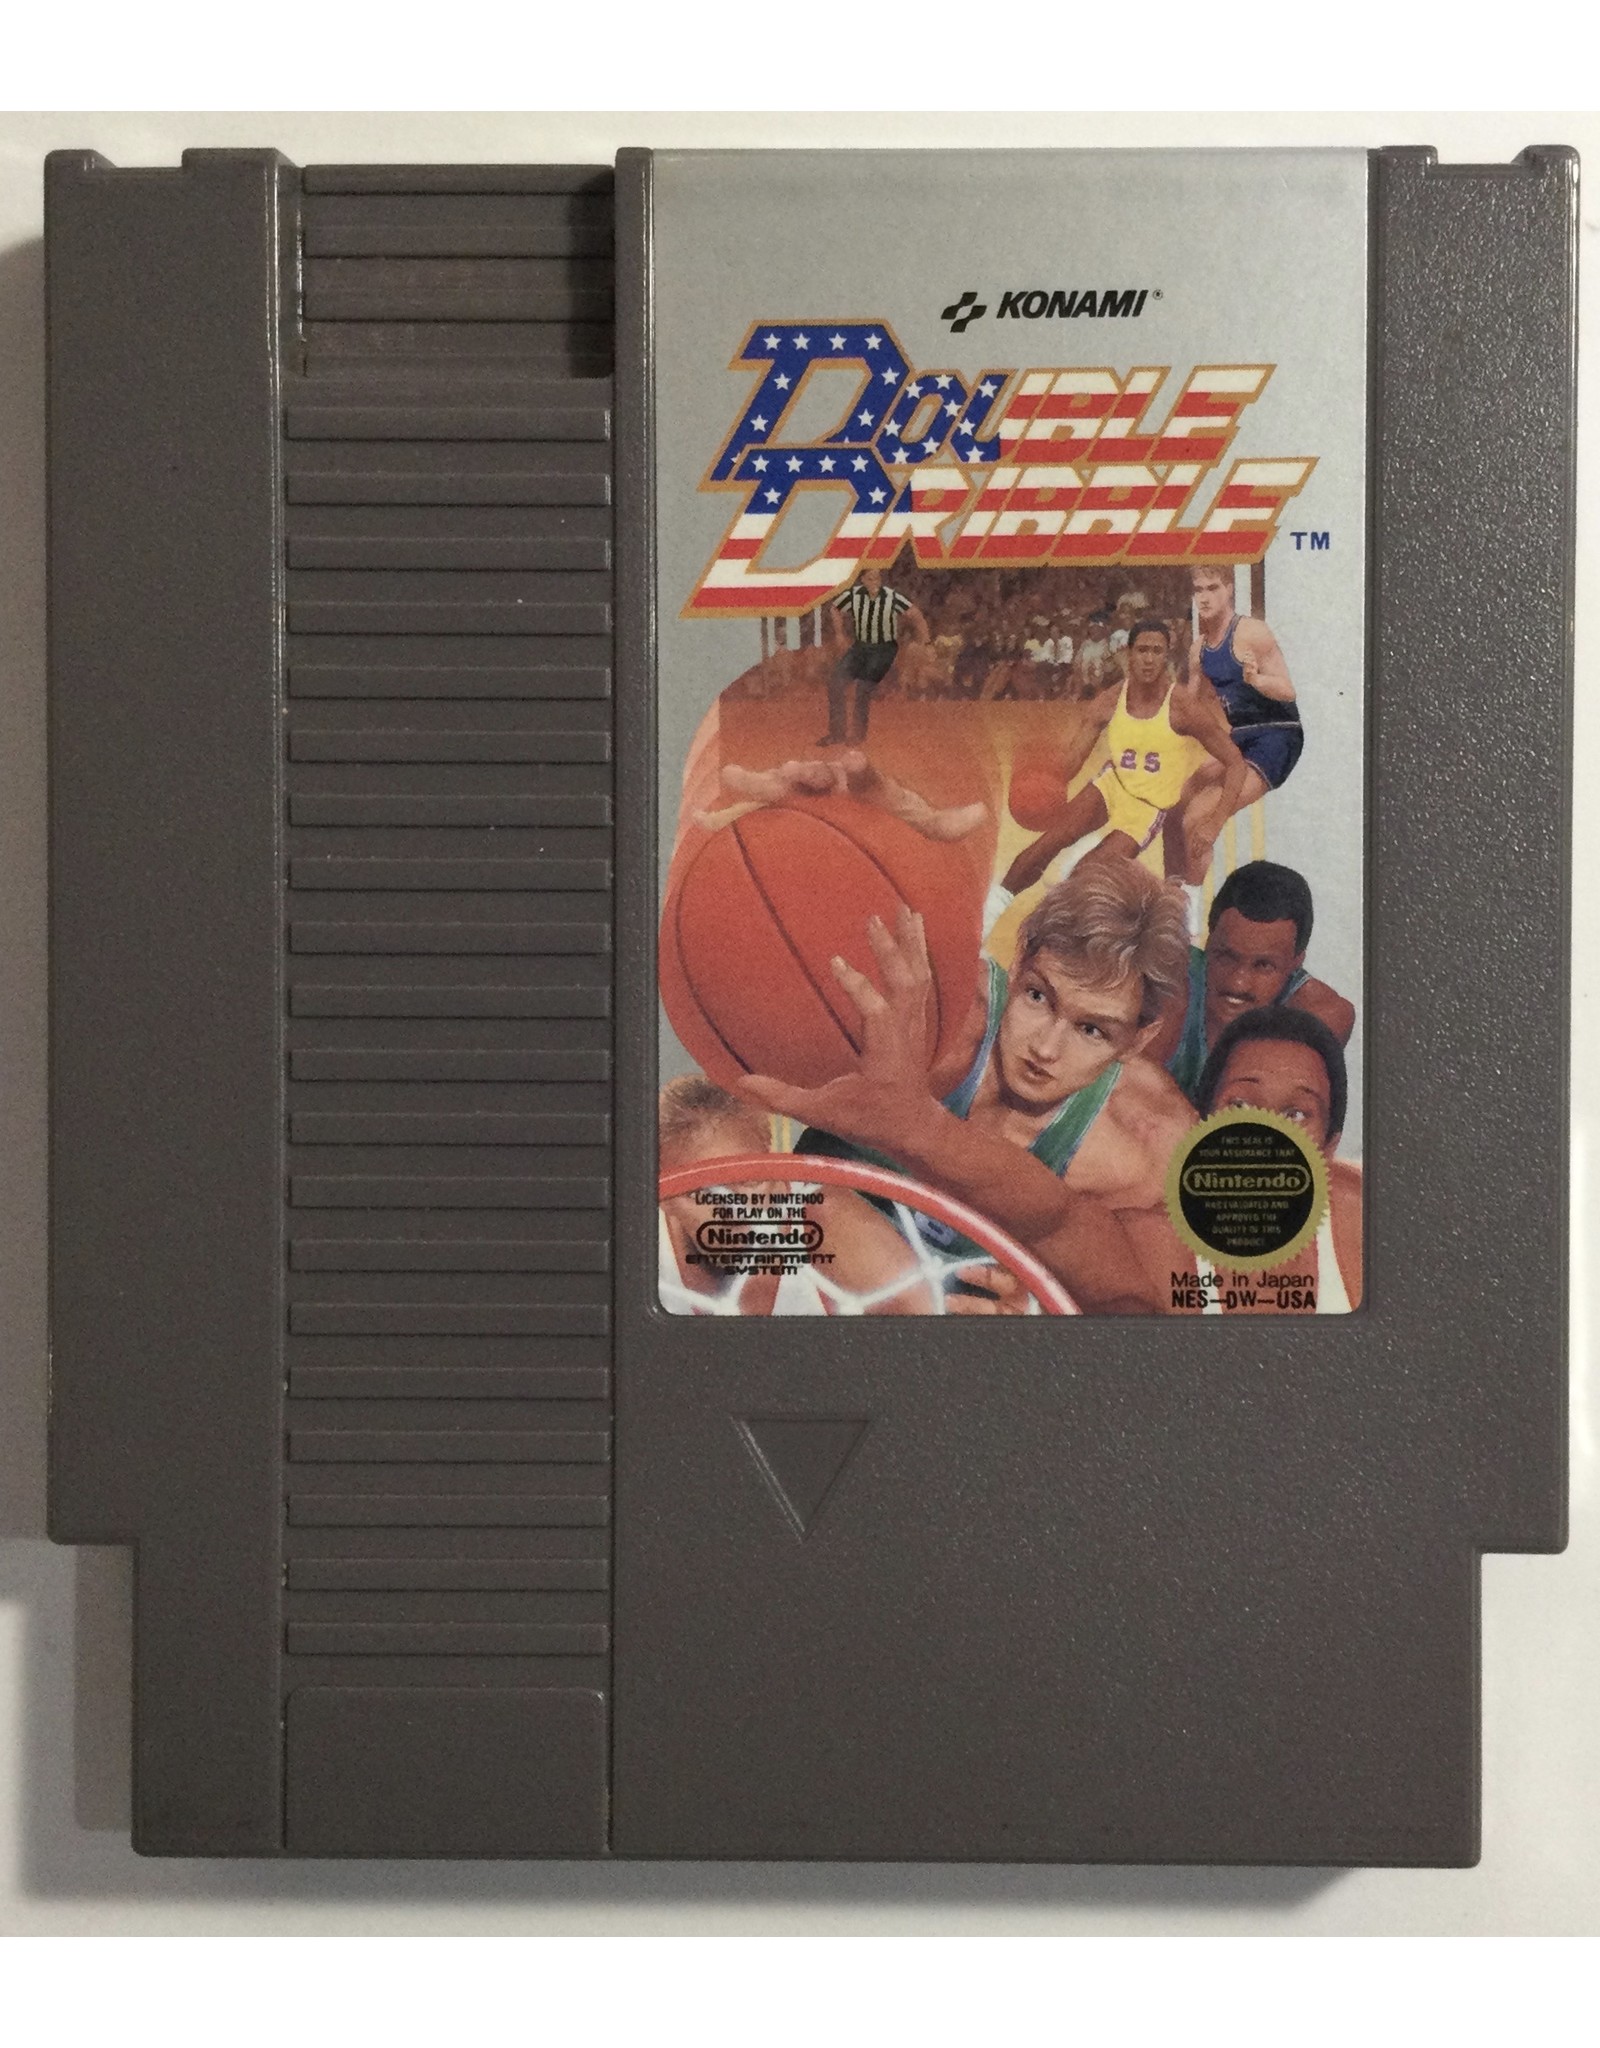 KONAMI Double Dribble for Nintendo Entertainment system (NES)